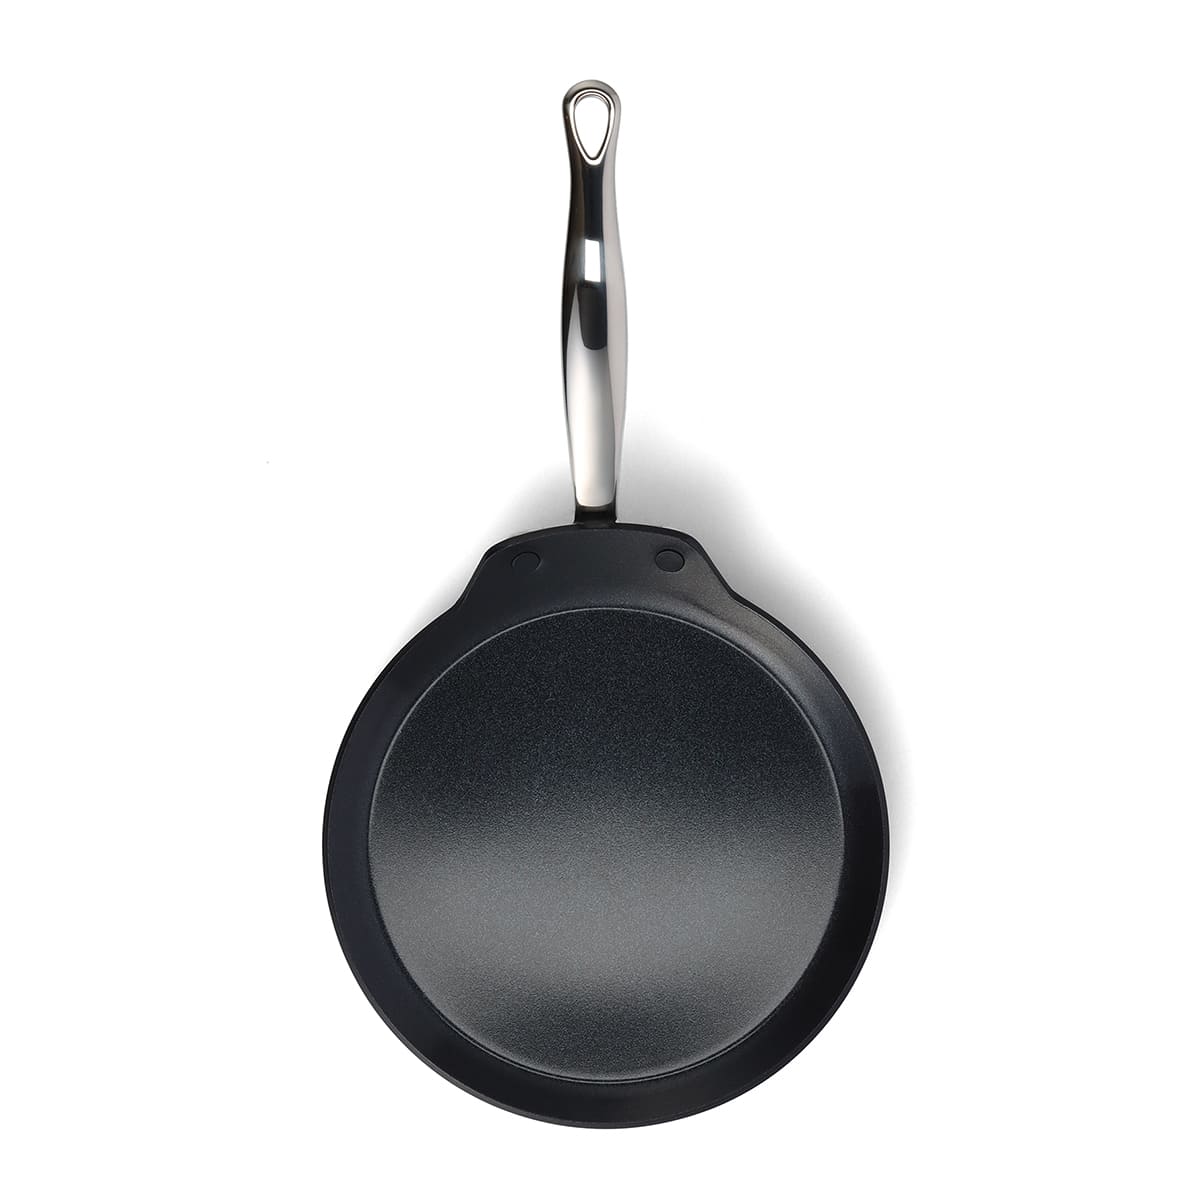 CC005337-001 - Barcelona Pro pancake pan, black - 24cm - Product Image 3